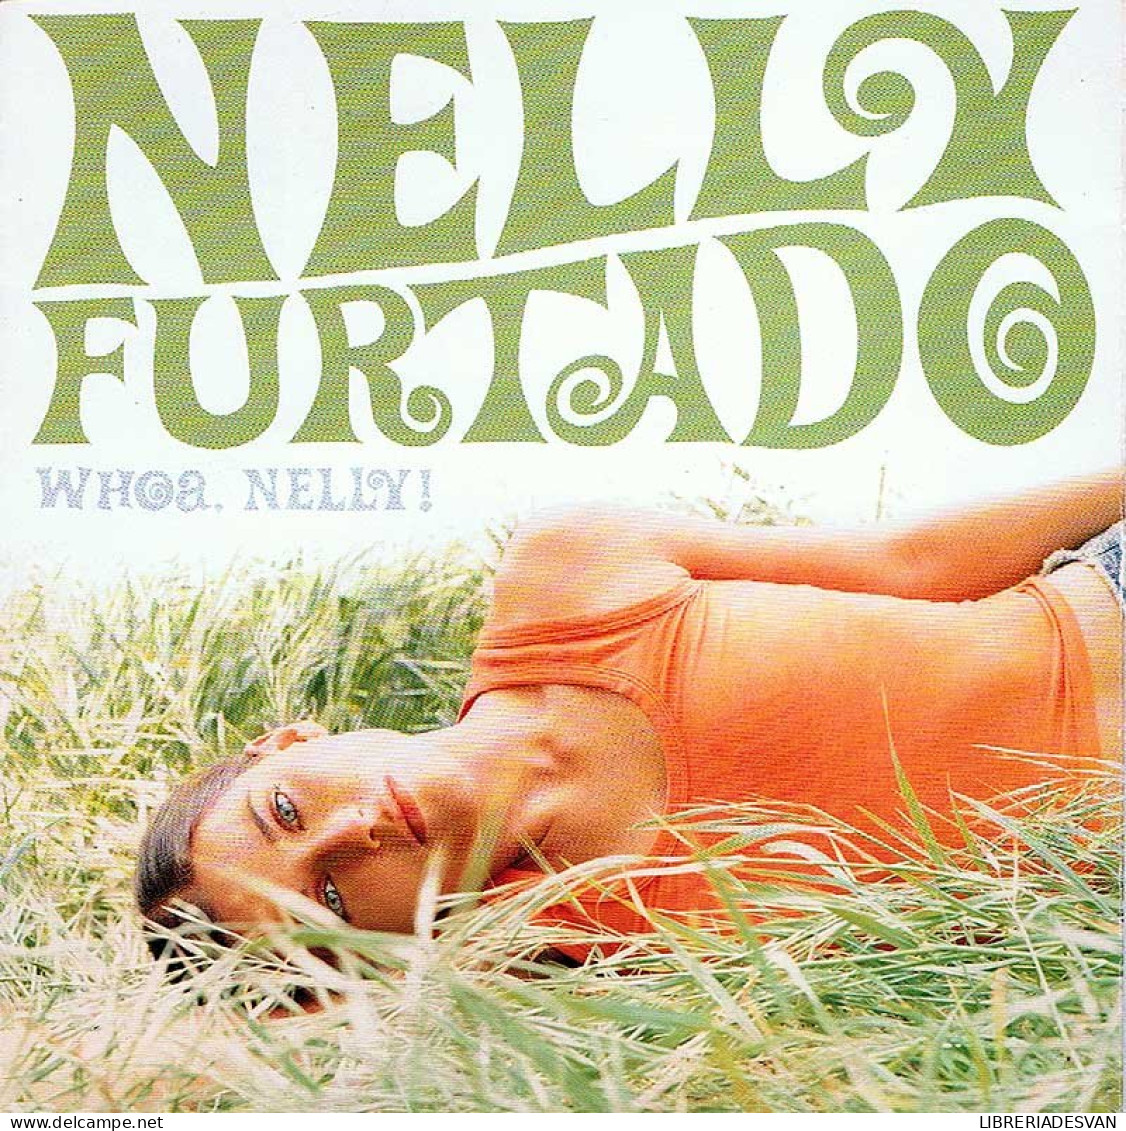 Nelly Furtado - Whoa, Nelly!. CD - Disco, Pop